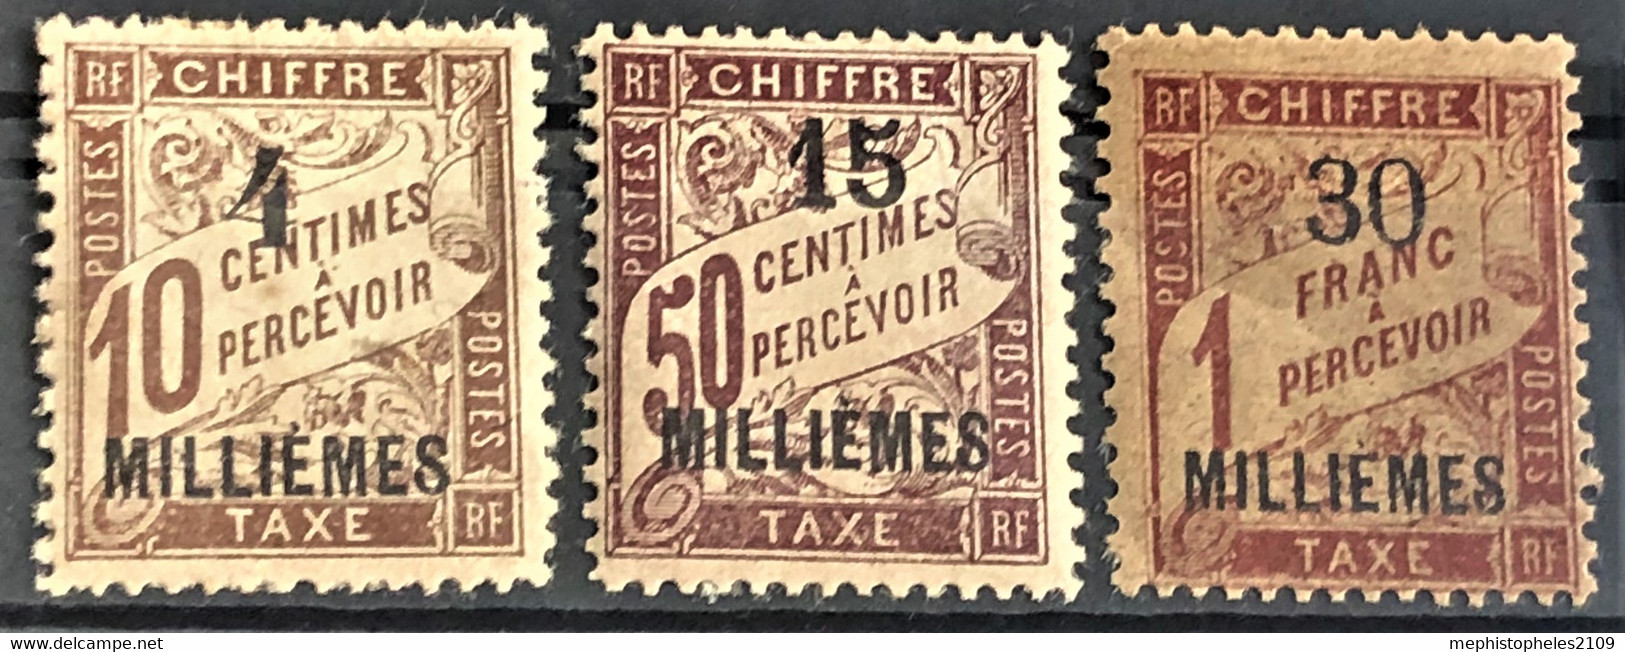 ALEXANDRIE 1922 - MLH - YT 2, 4, 5 - Chiffre Taxe - Neufs